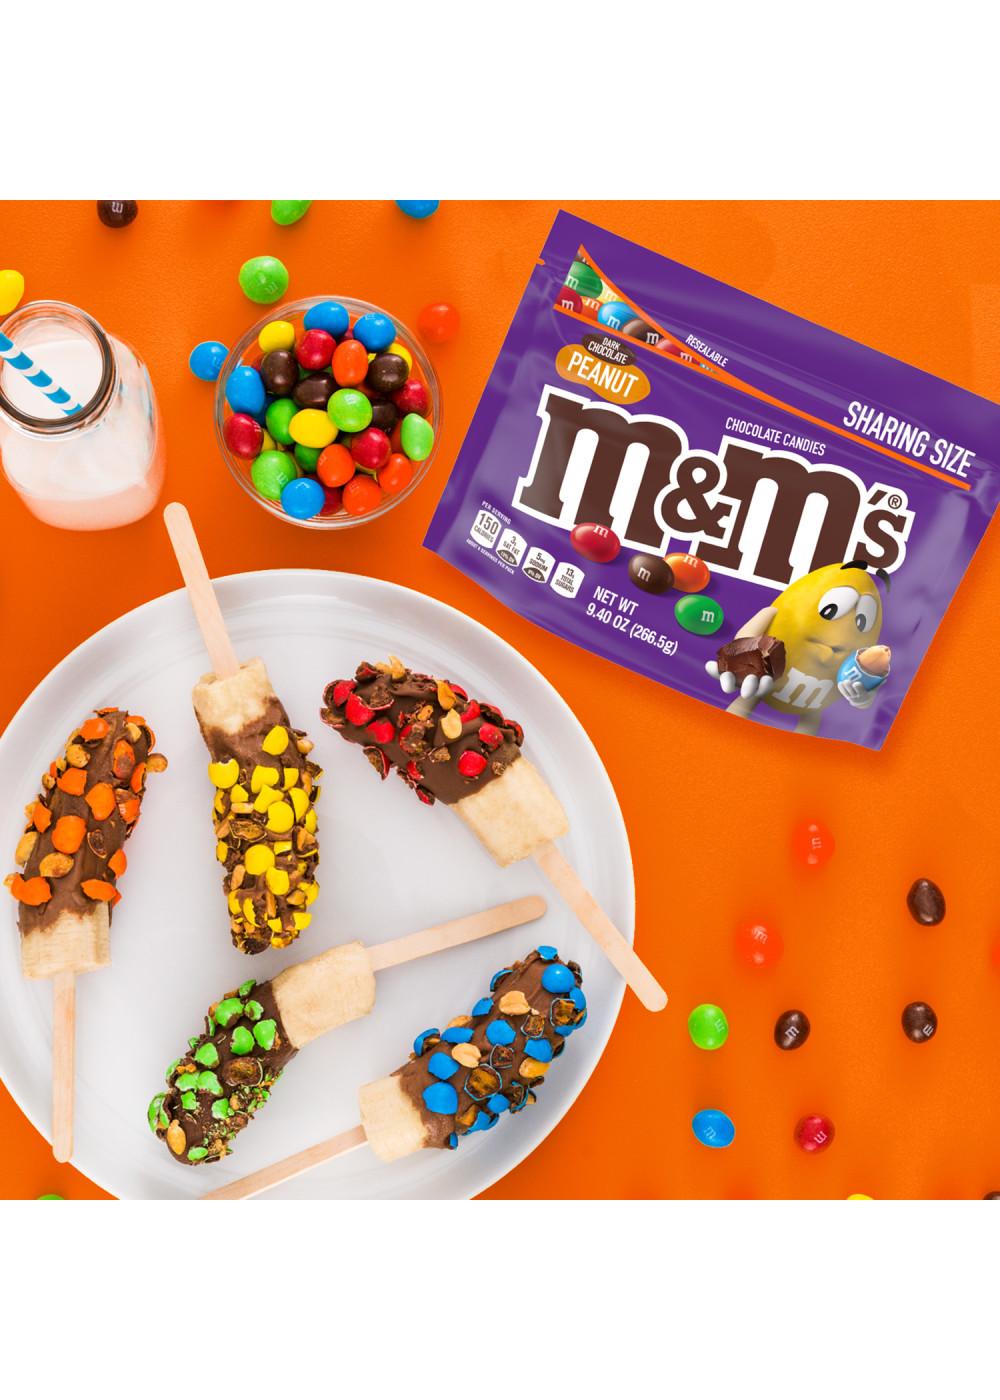 M&M'S Peanut Dark Chocolate Candy - Sharing Size; image 10 of 11